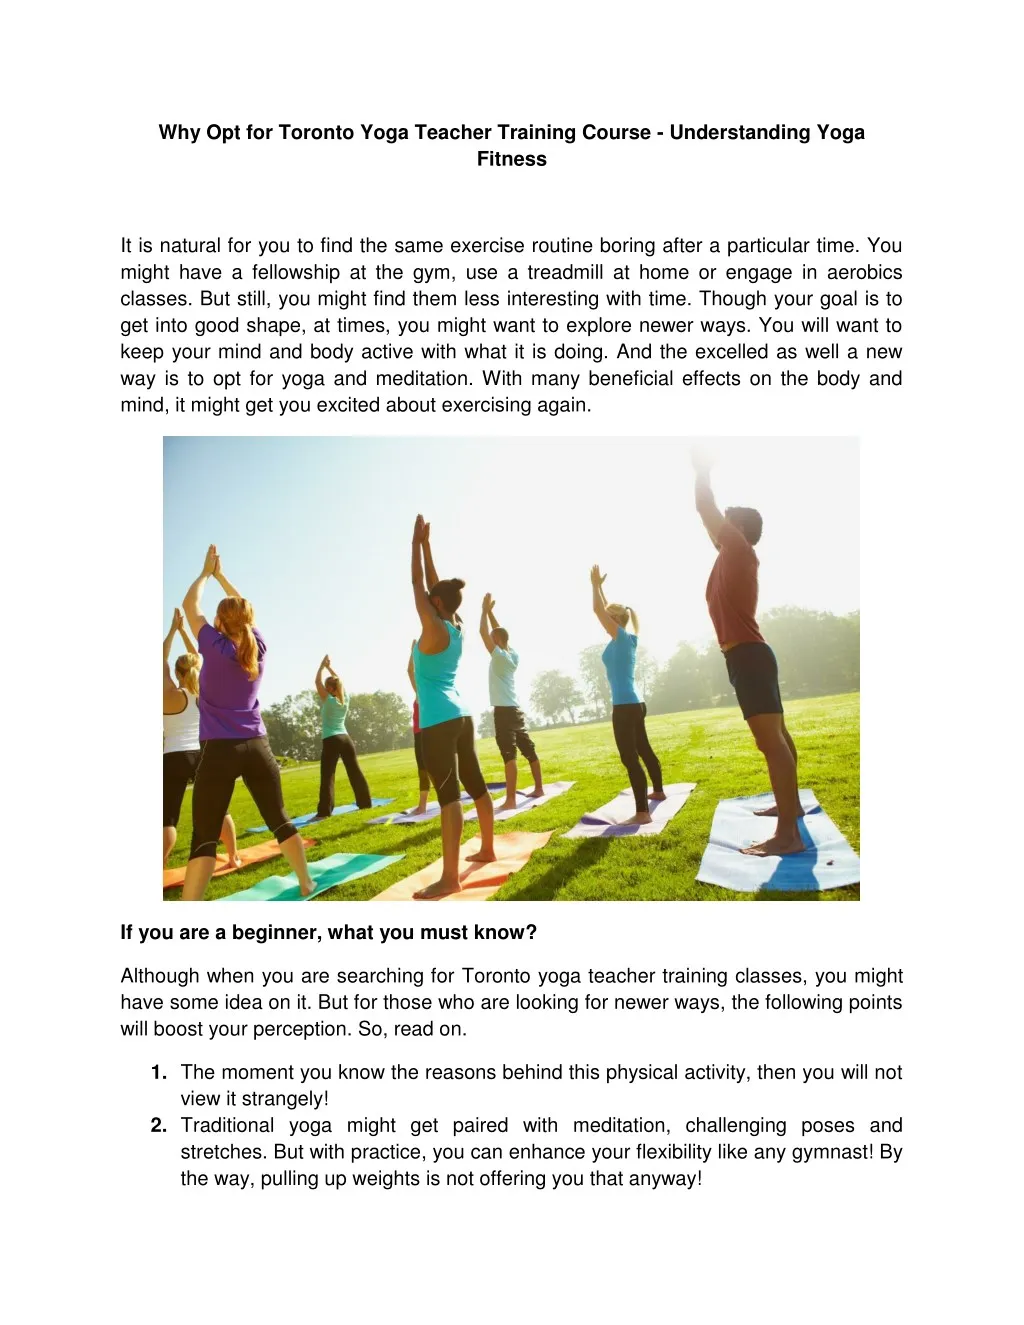 why opt for toronto yoga teacher training course